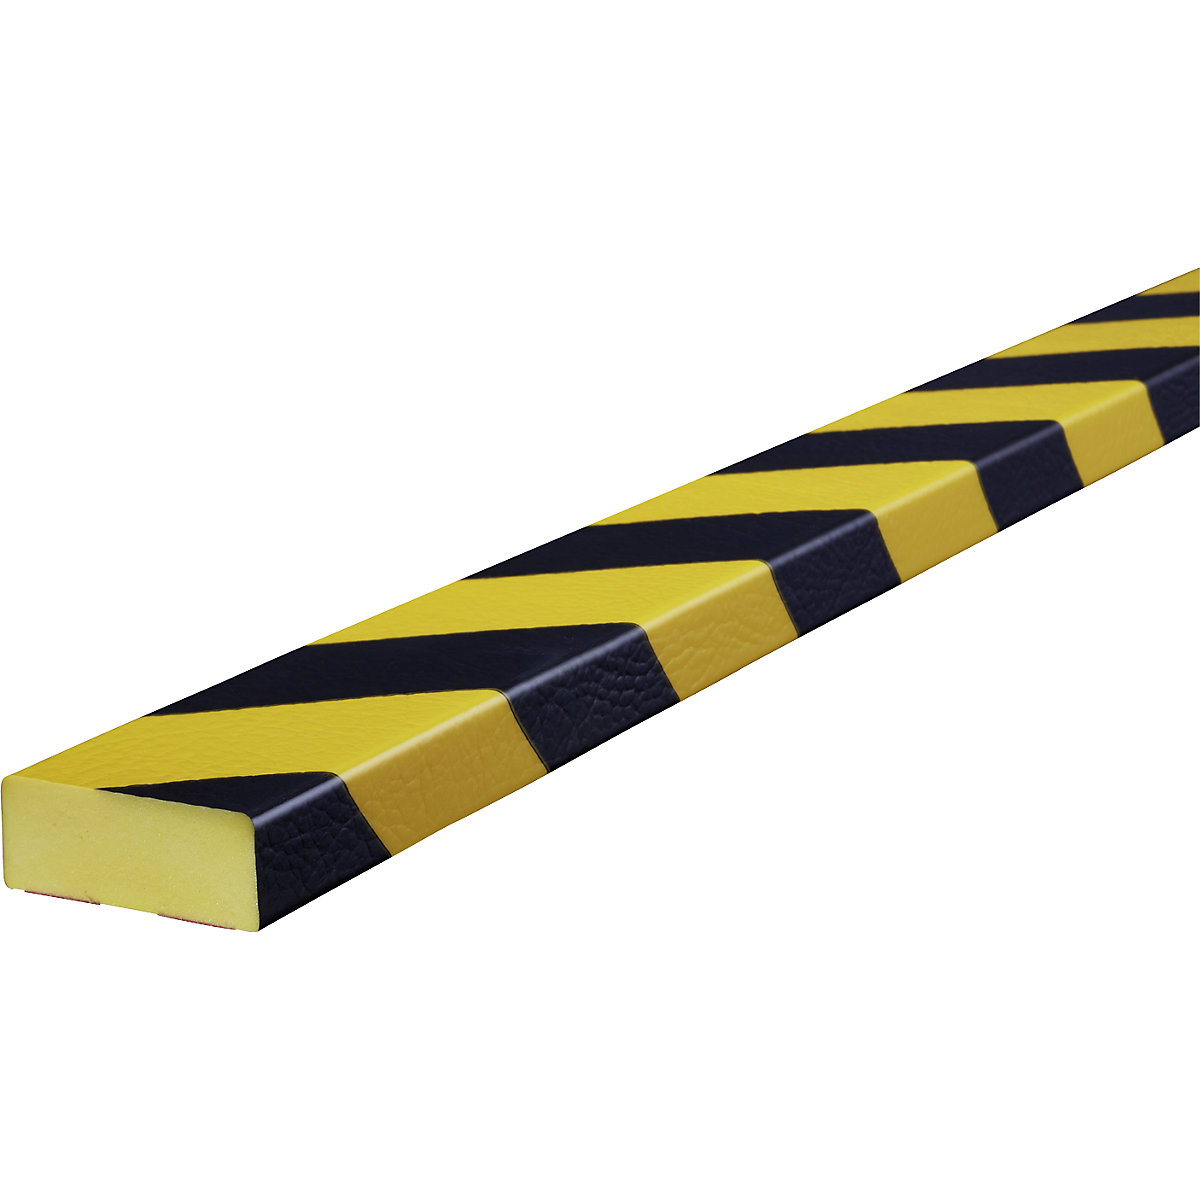 Ochrana plôch Knuffi® – SHG, typ D, 1 m kus, čierna / žltá-24